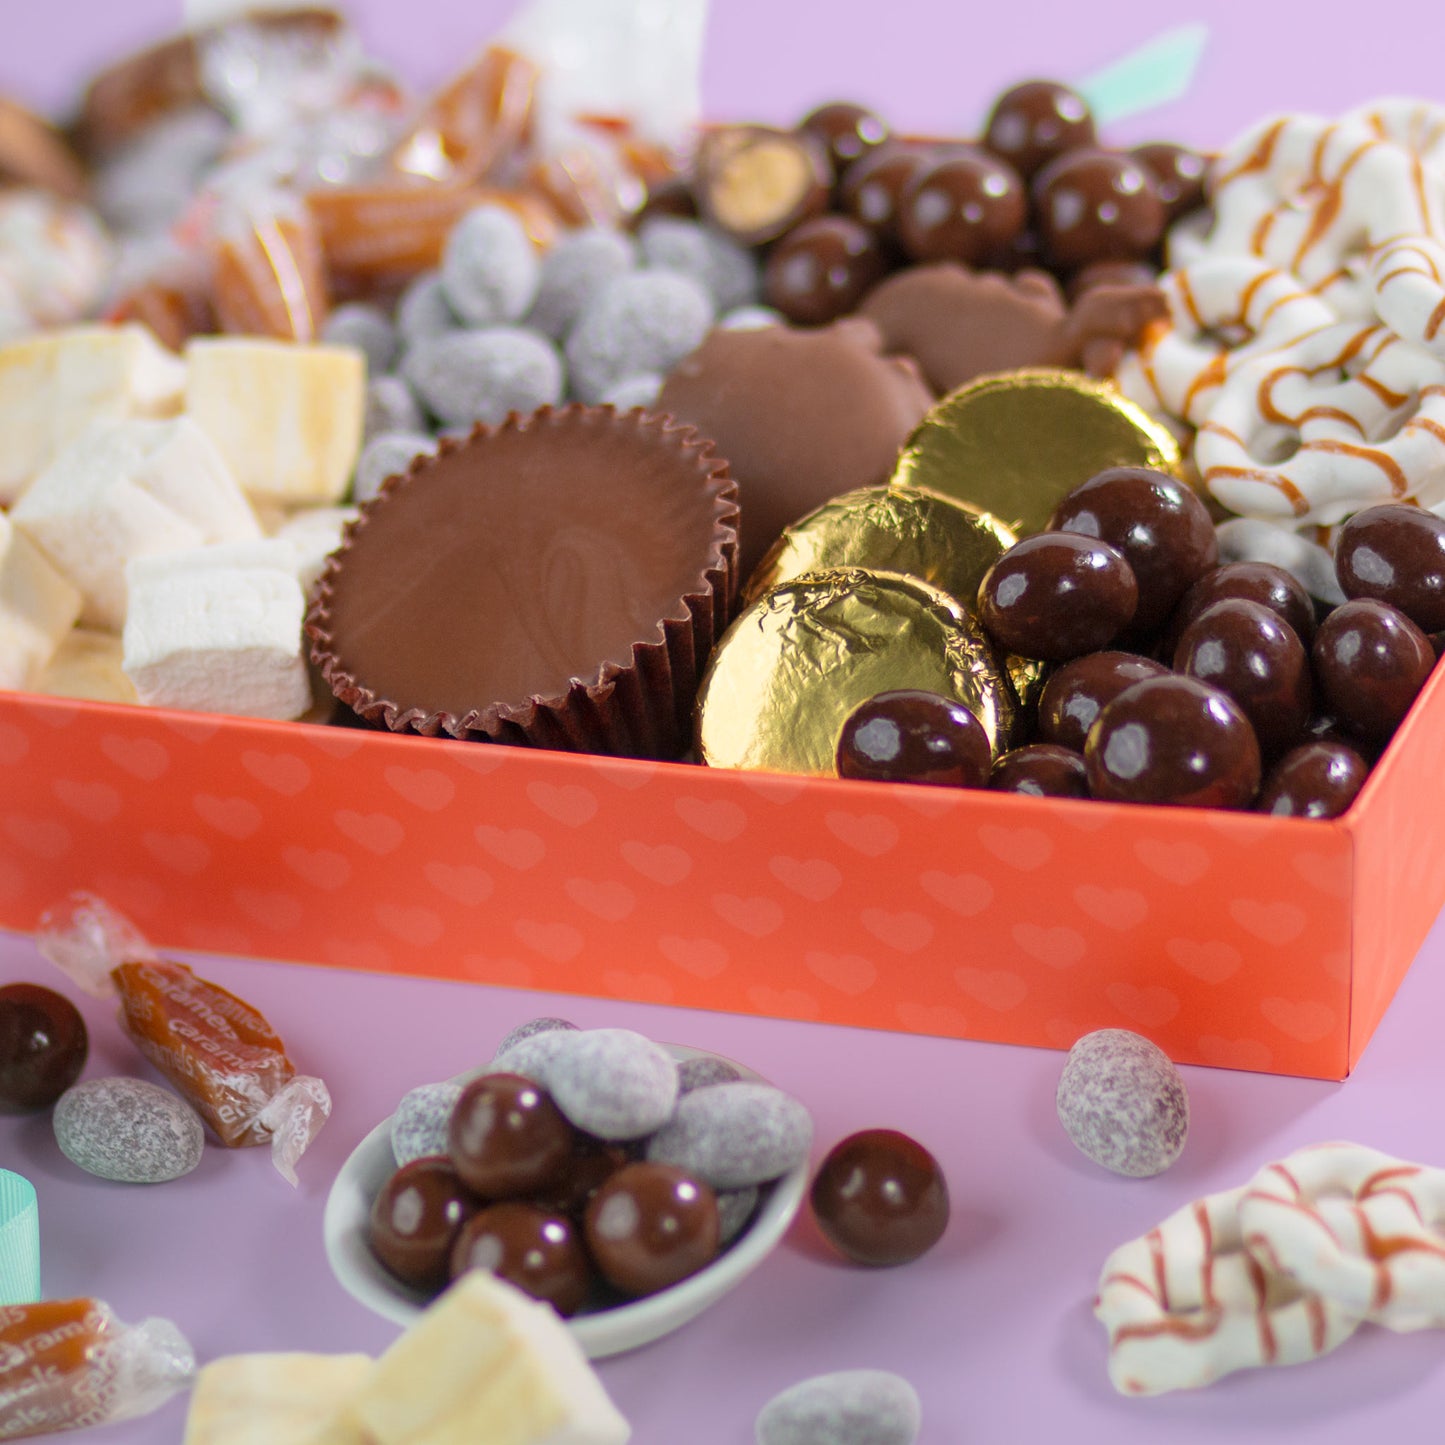 Signature Chocolate & Candy Box